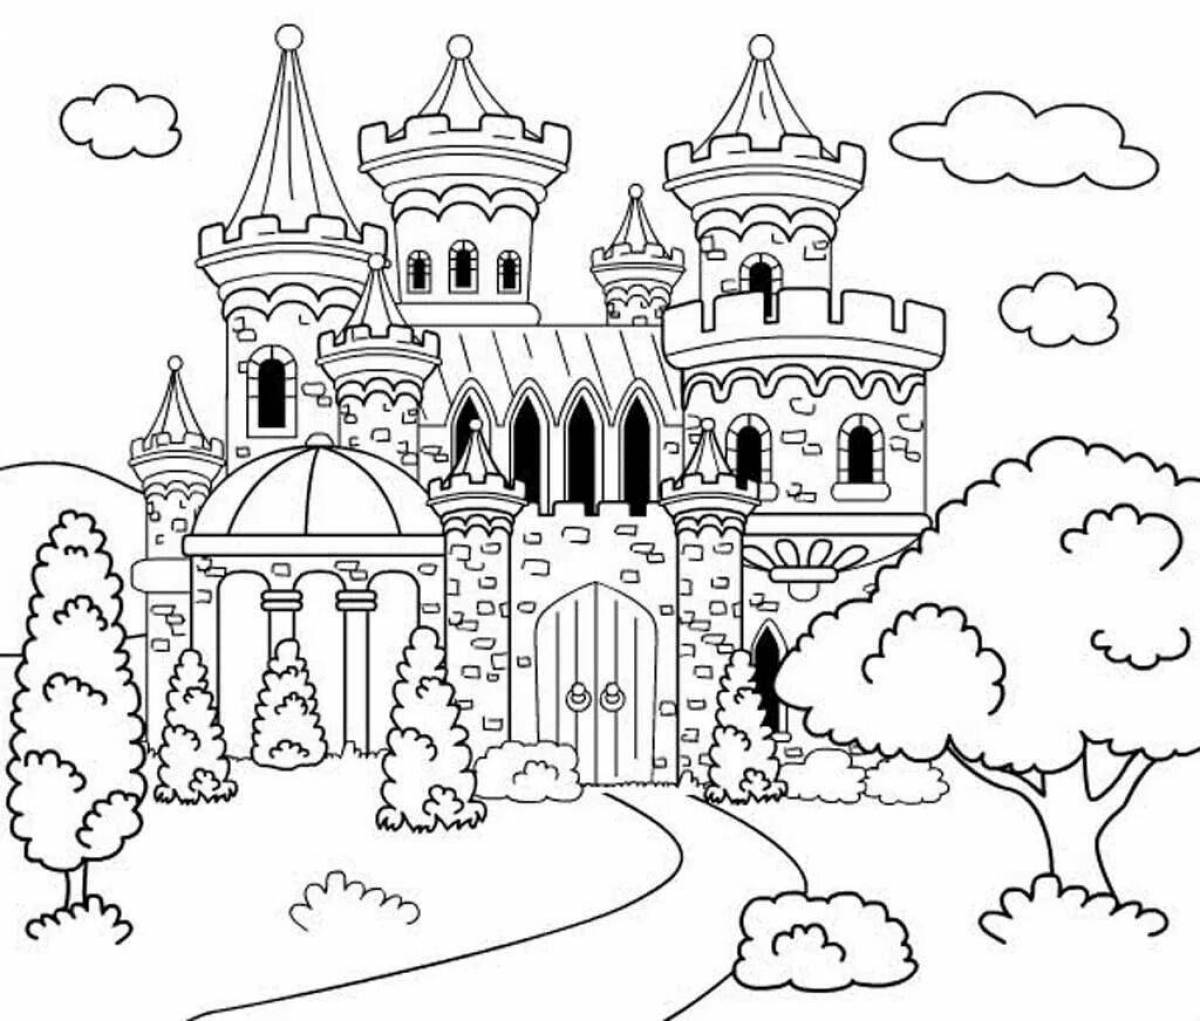 Fairy palace #1